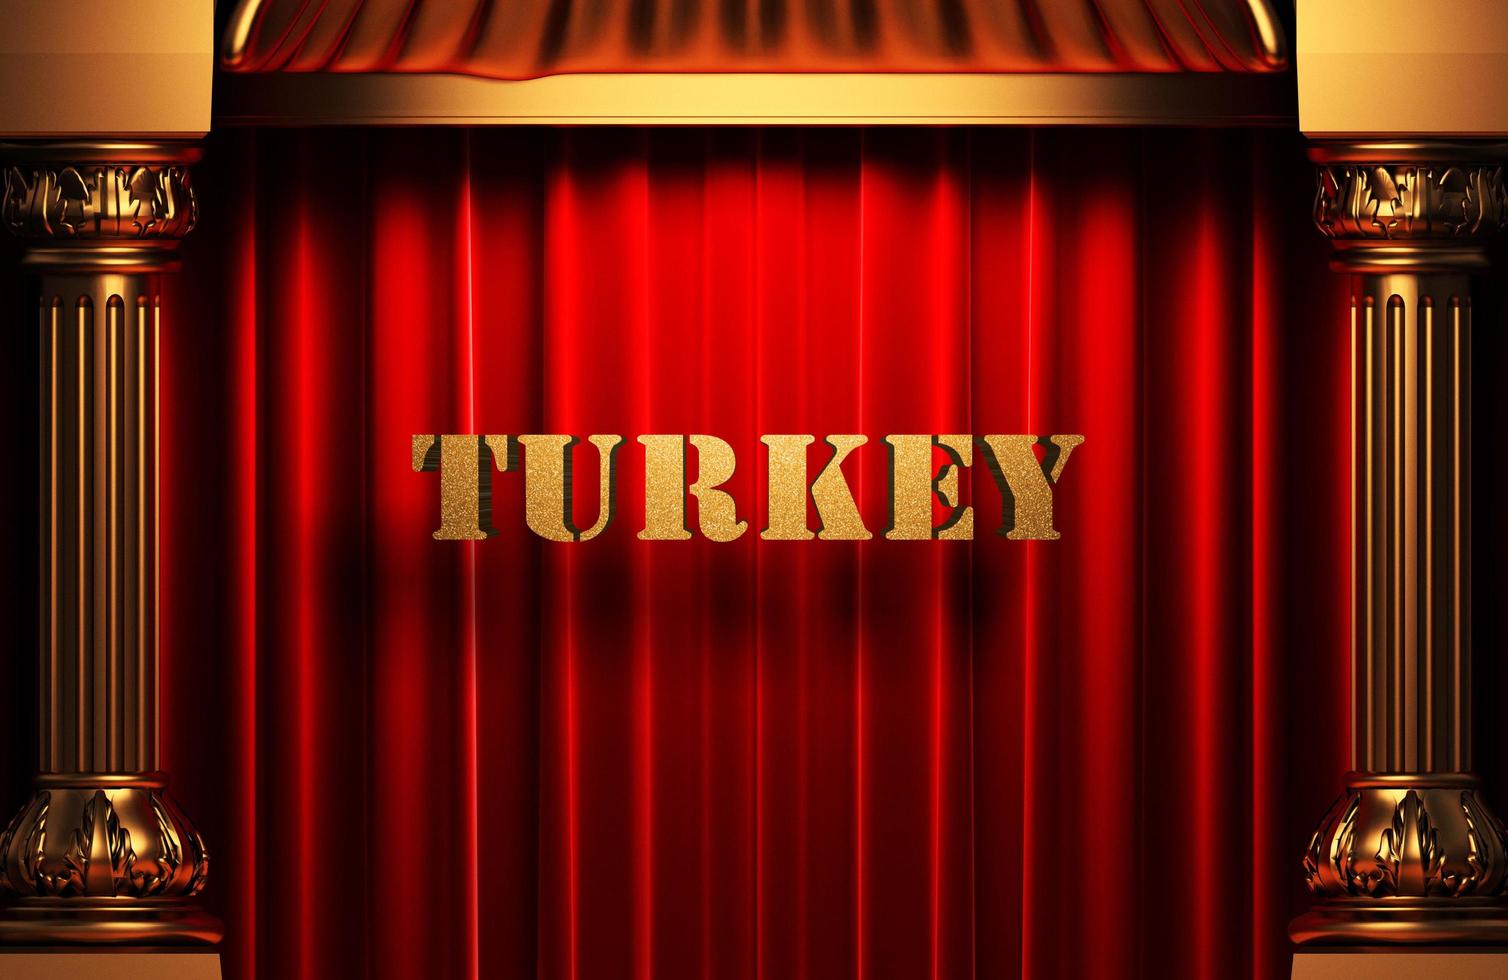 turkey golden word on red curtain photo